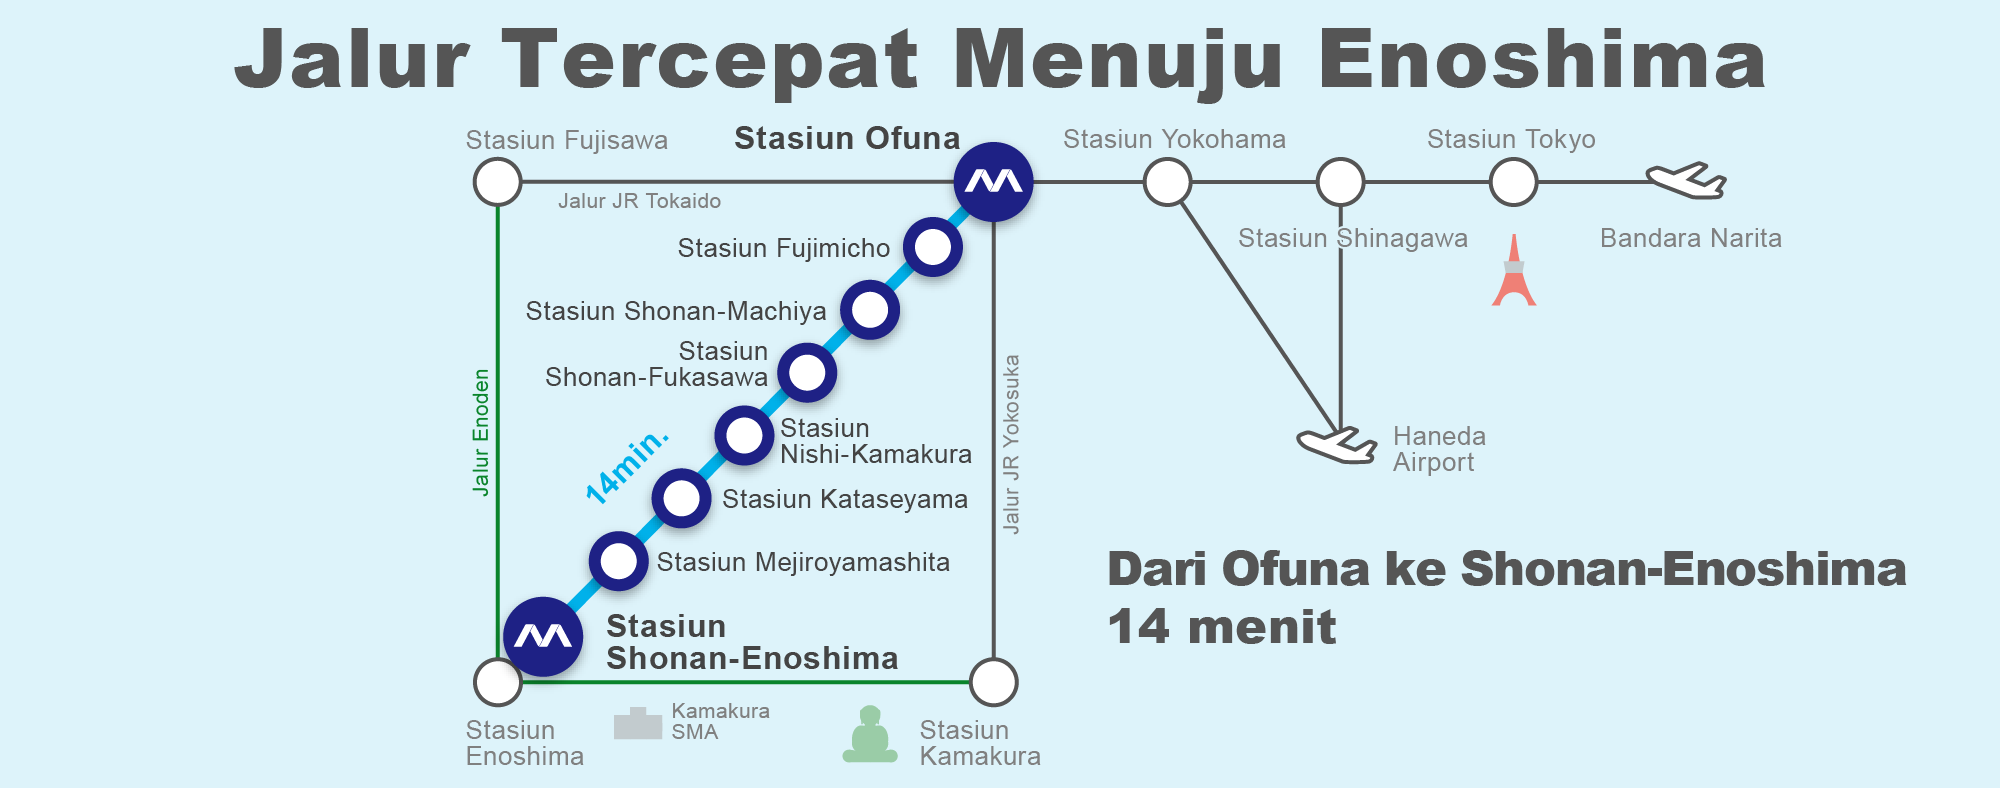 Jalur tercepat menuju Enoshima Dari Ofuna ke Shonan-Enoshima 320Yen / 14min.